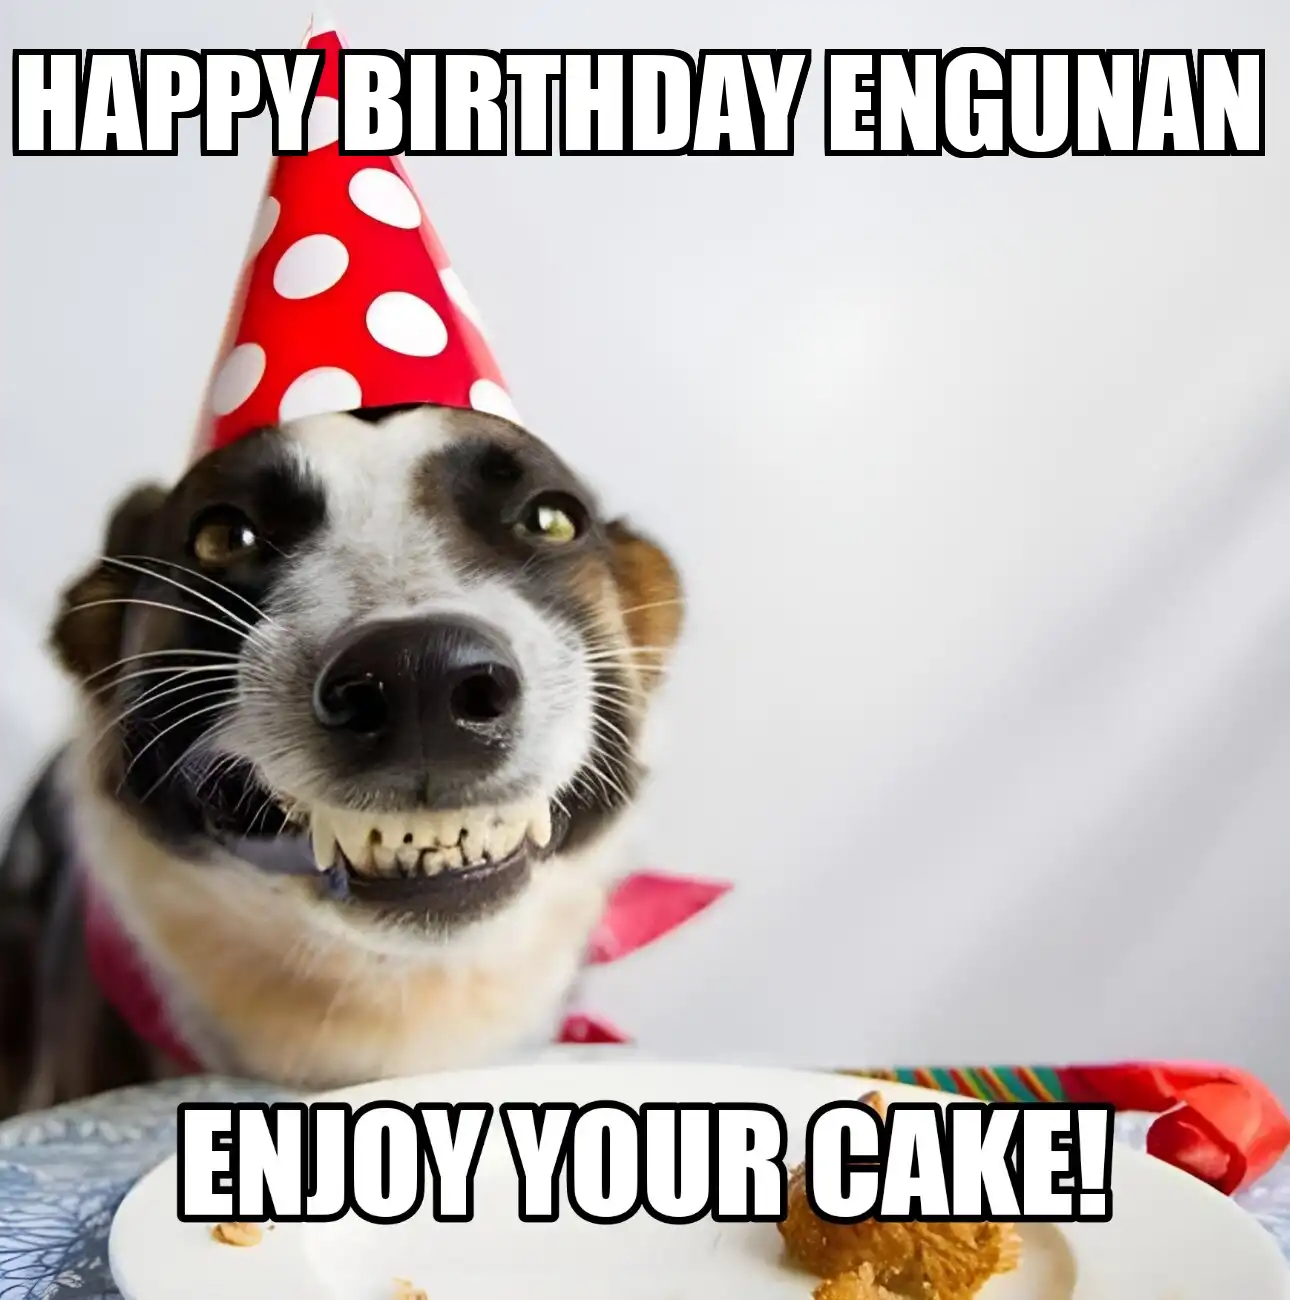 Happy Birthday Engunan Enjoy Your Cake Dog Meme